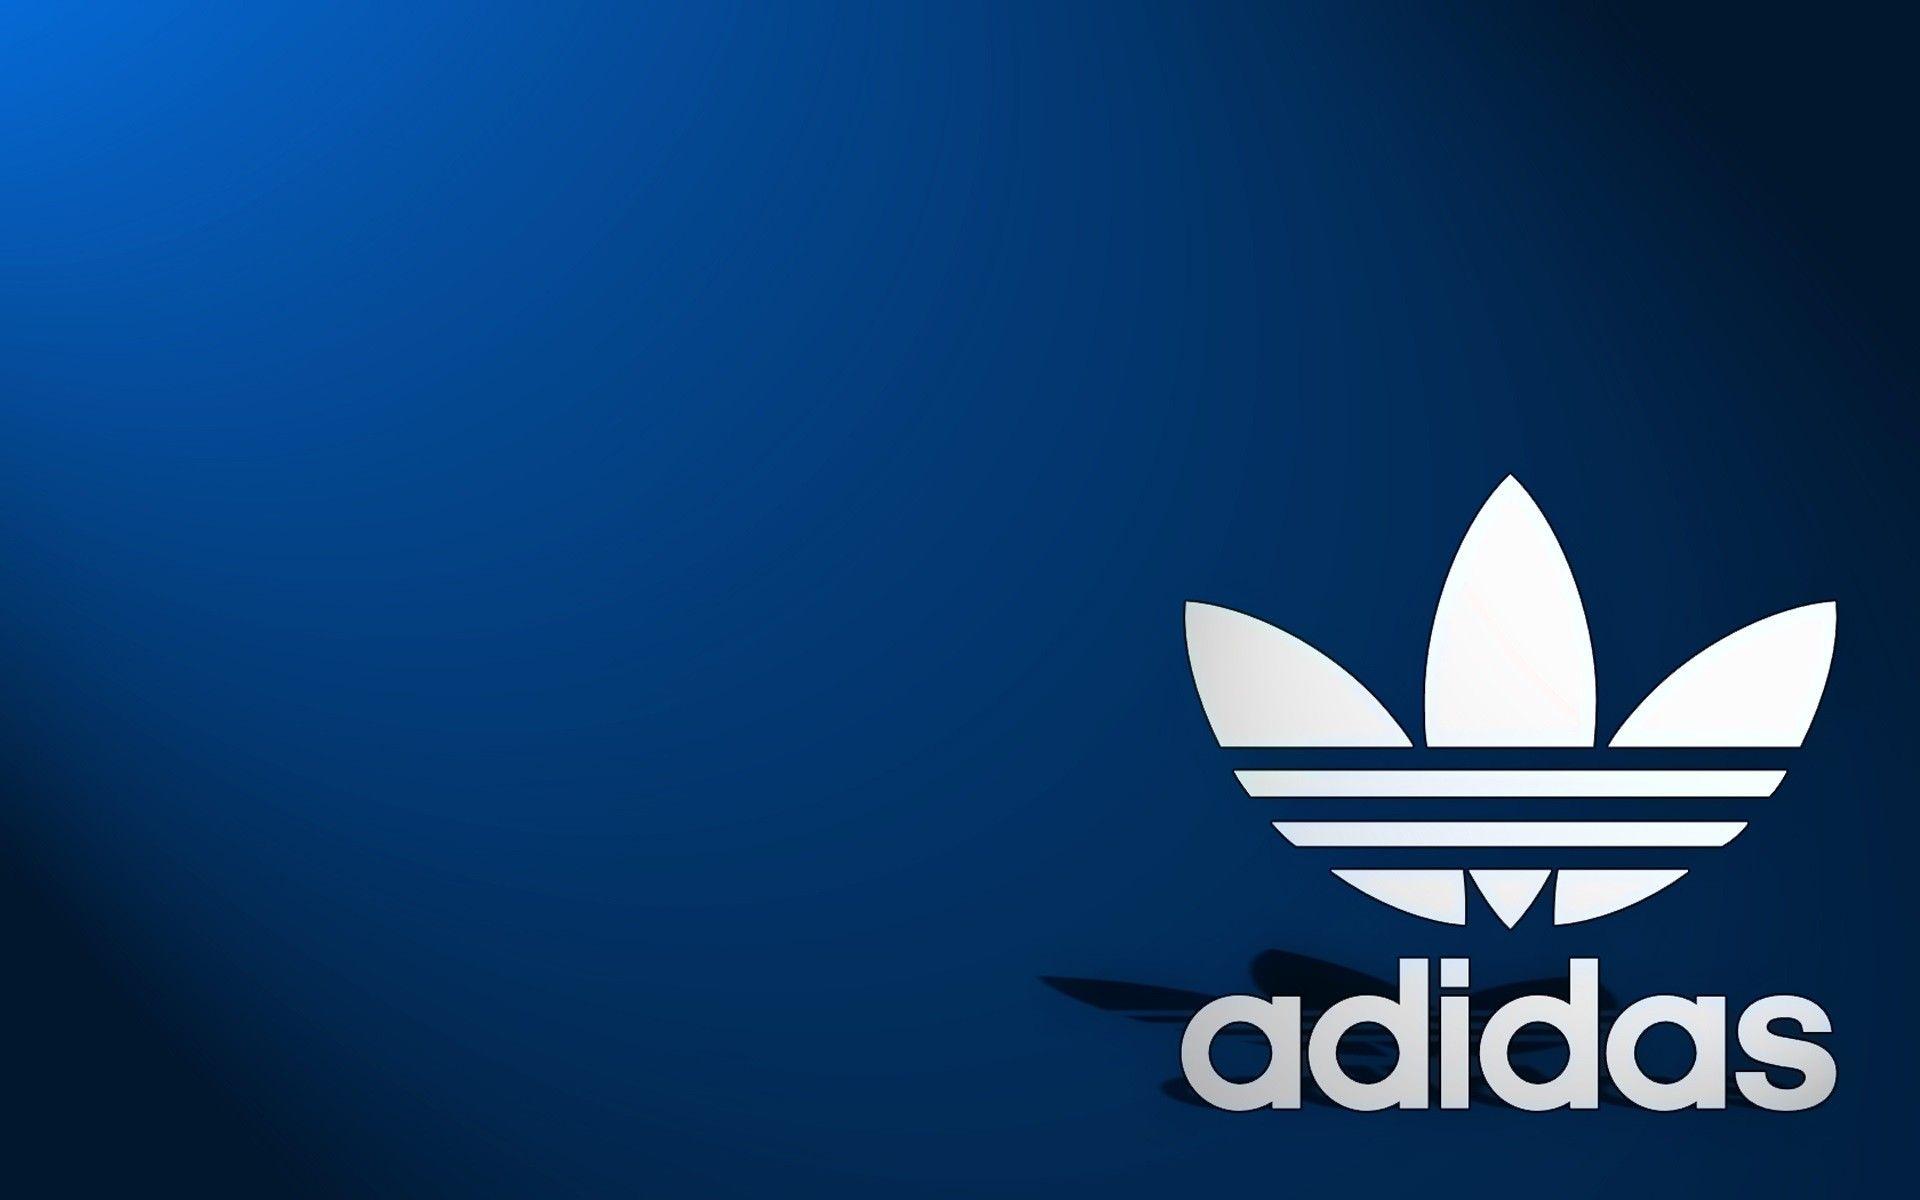 Adidas Originals Wallpapers Top Free Adidas Originals Backgrounds Wallpaperaccess